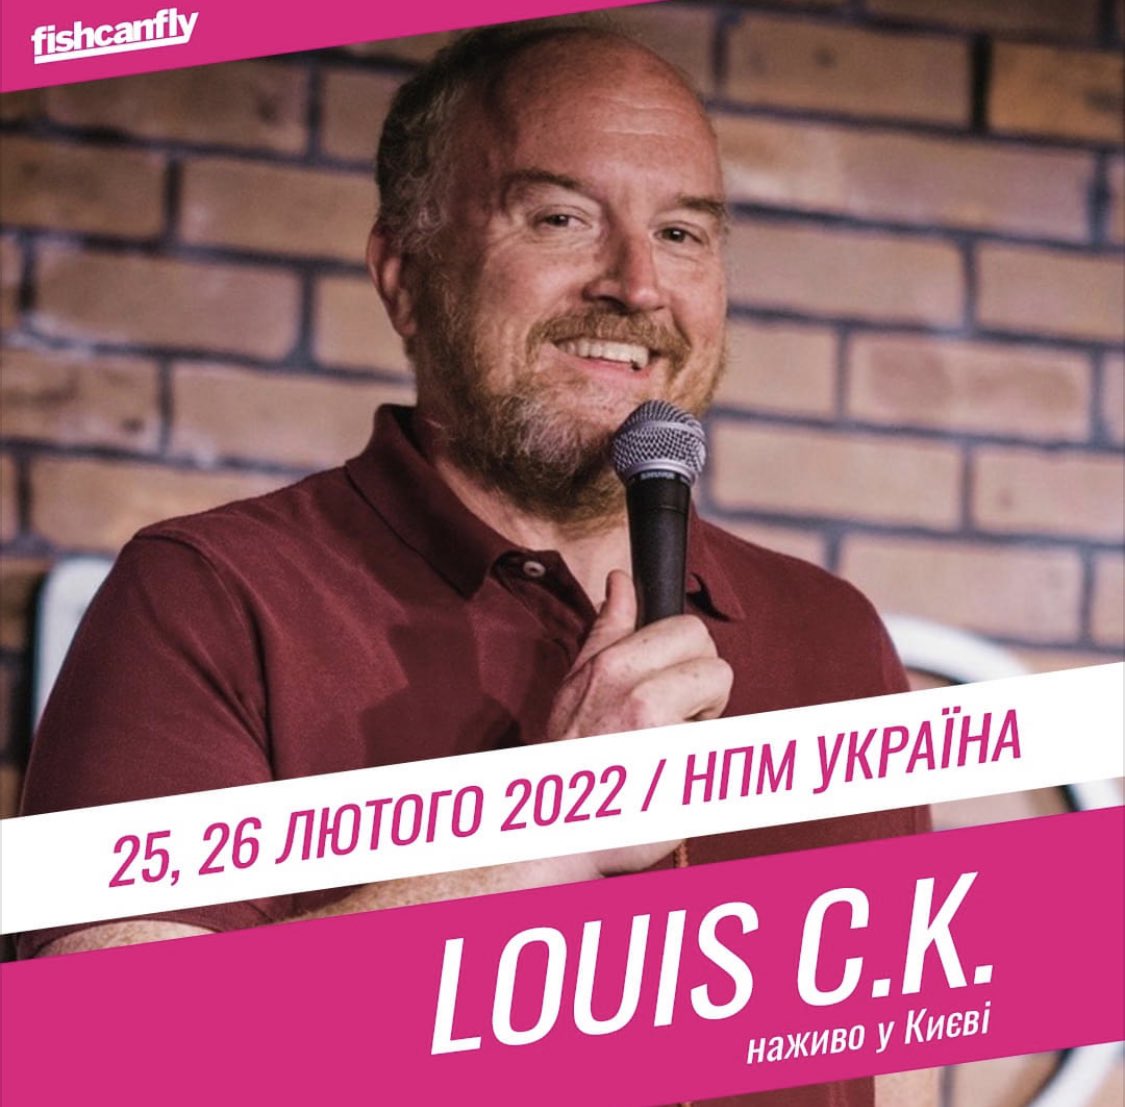 Apparently, Louis C.K. is coming to Kyiv https://t.co/oxyU6b8Zoc